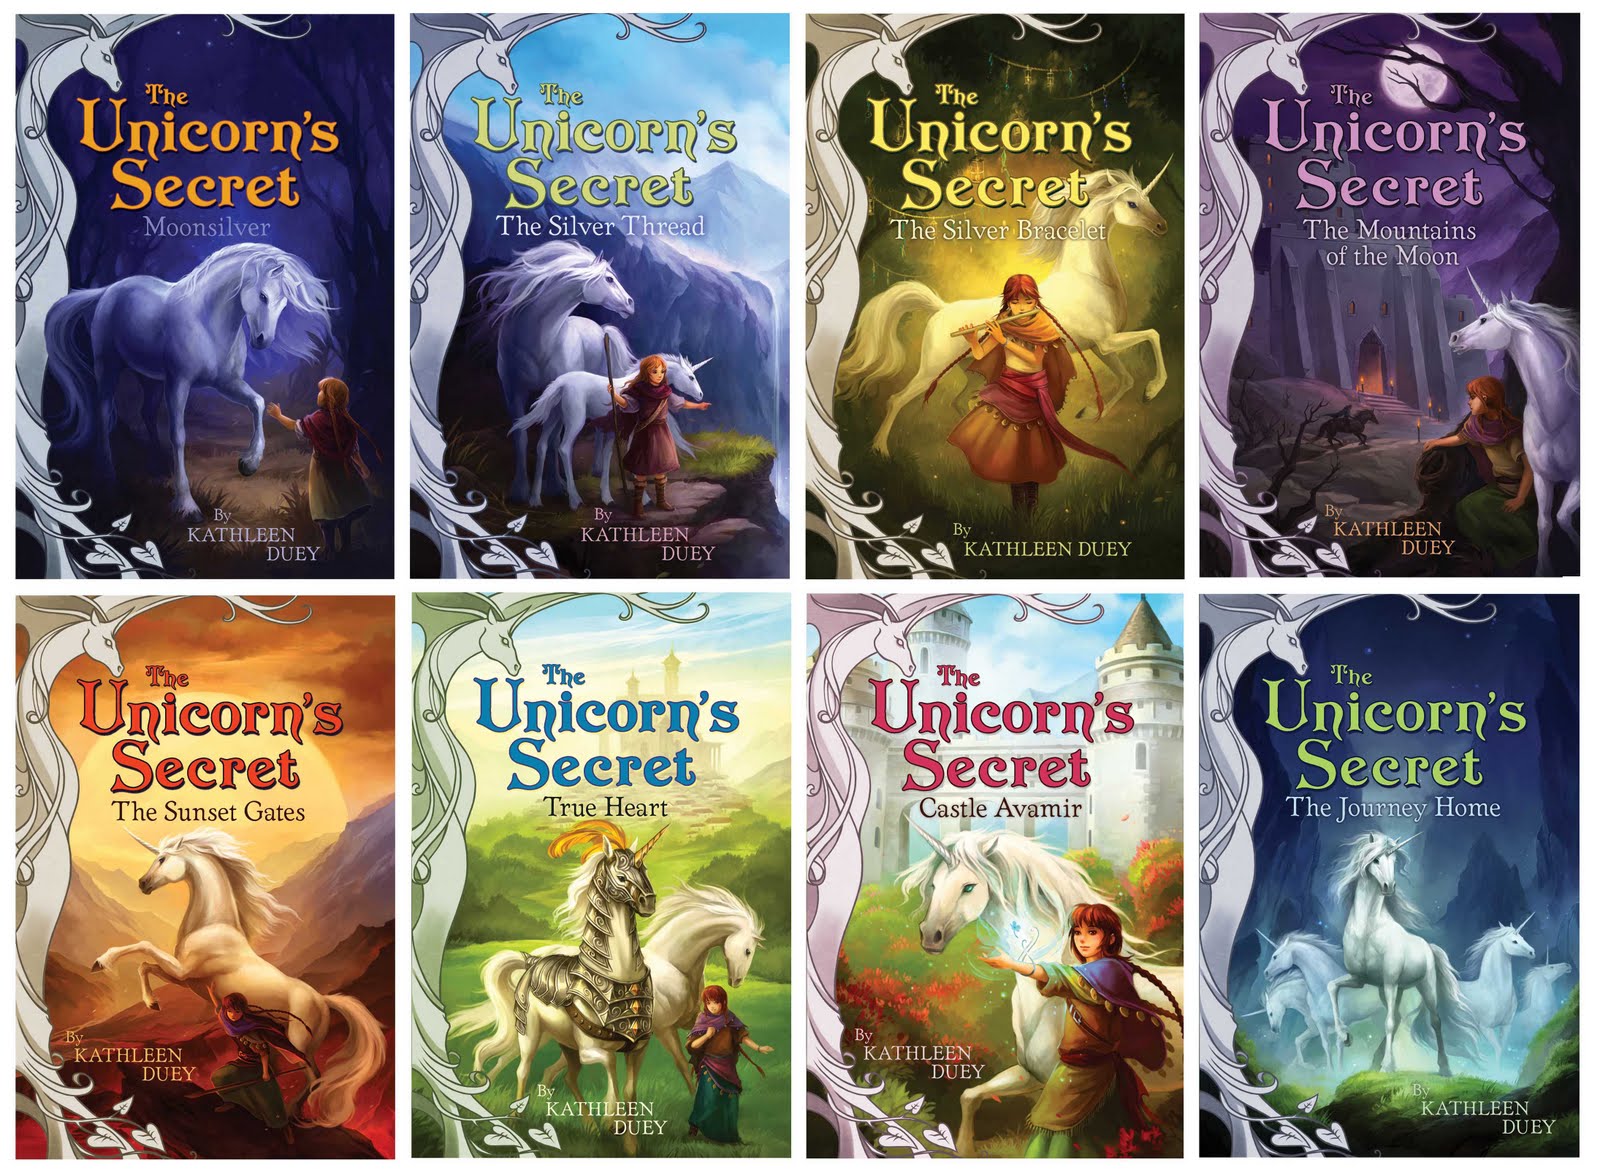 Unicorn book. Книги Юникорн бук. Секреты про единорогов. Unicorn книги. Юникорн книги по психологии.